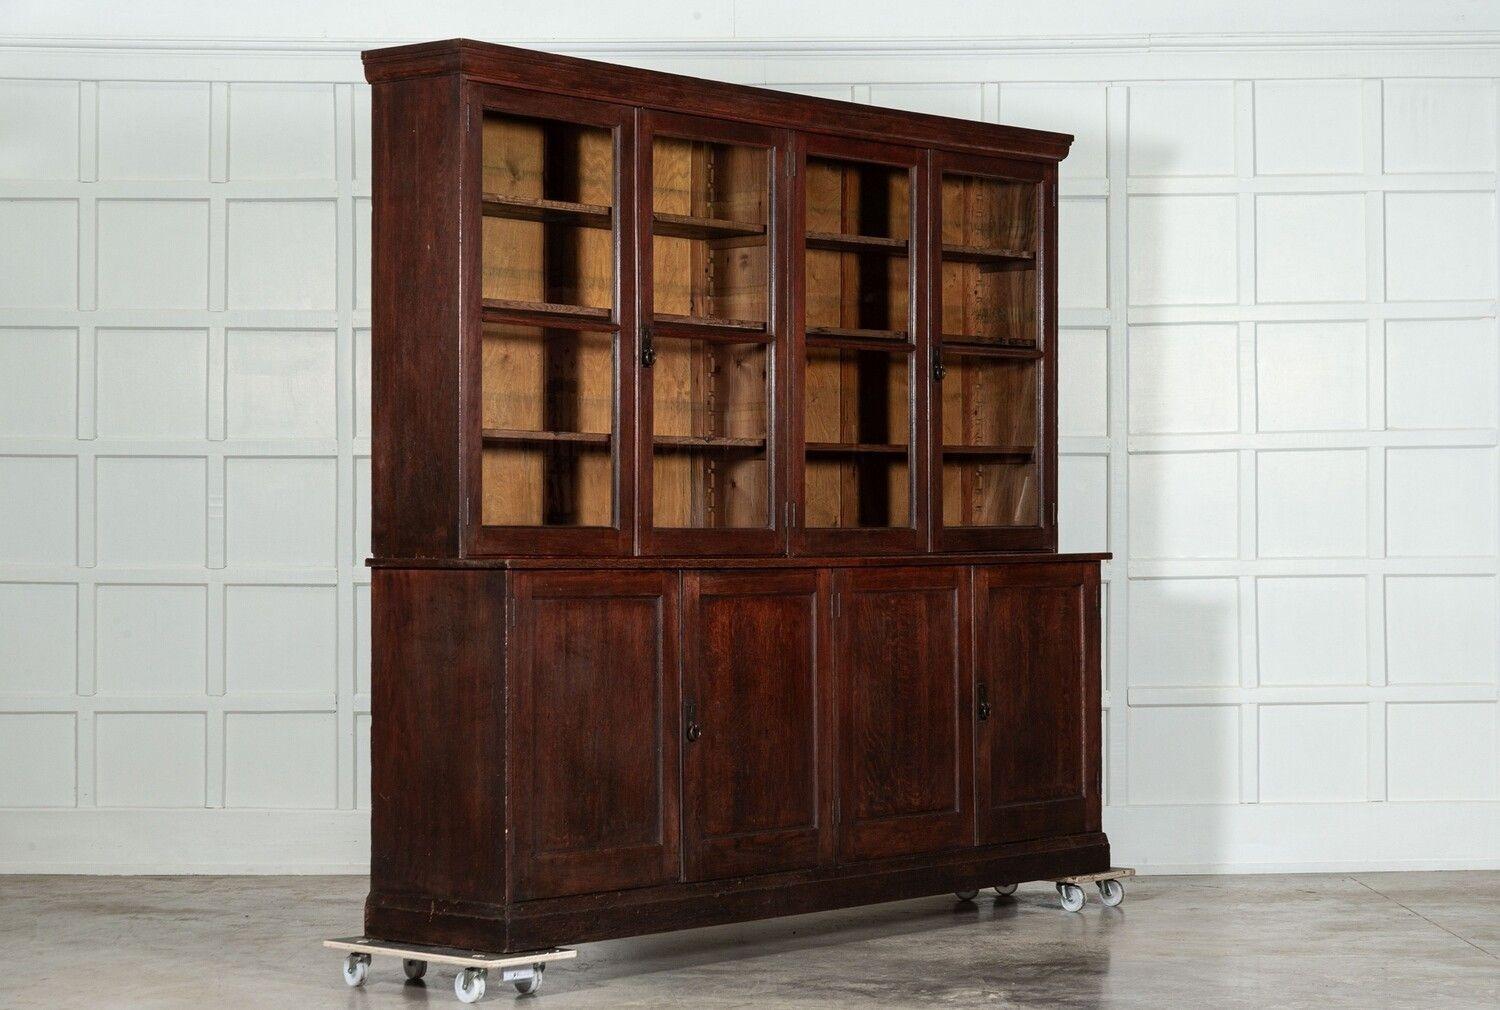 Monumental English Oak Glazed Bookcase In Good Condition For Sale In Staffordshire, GB